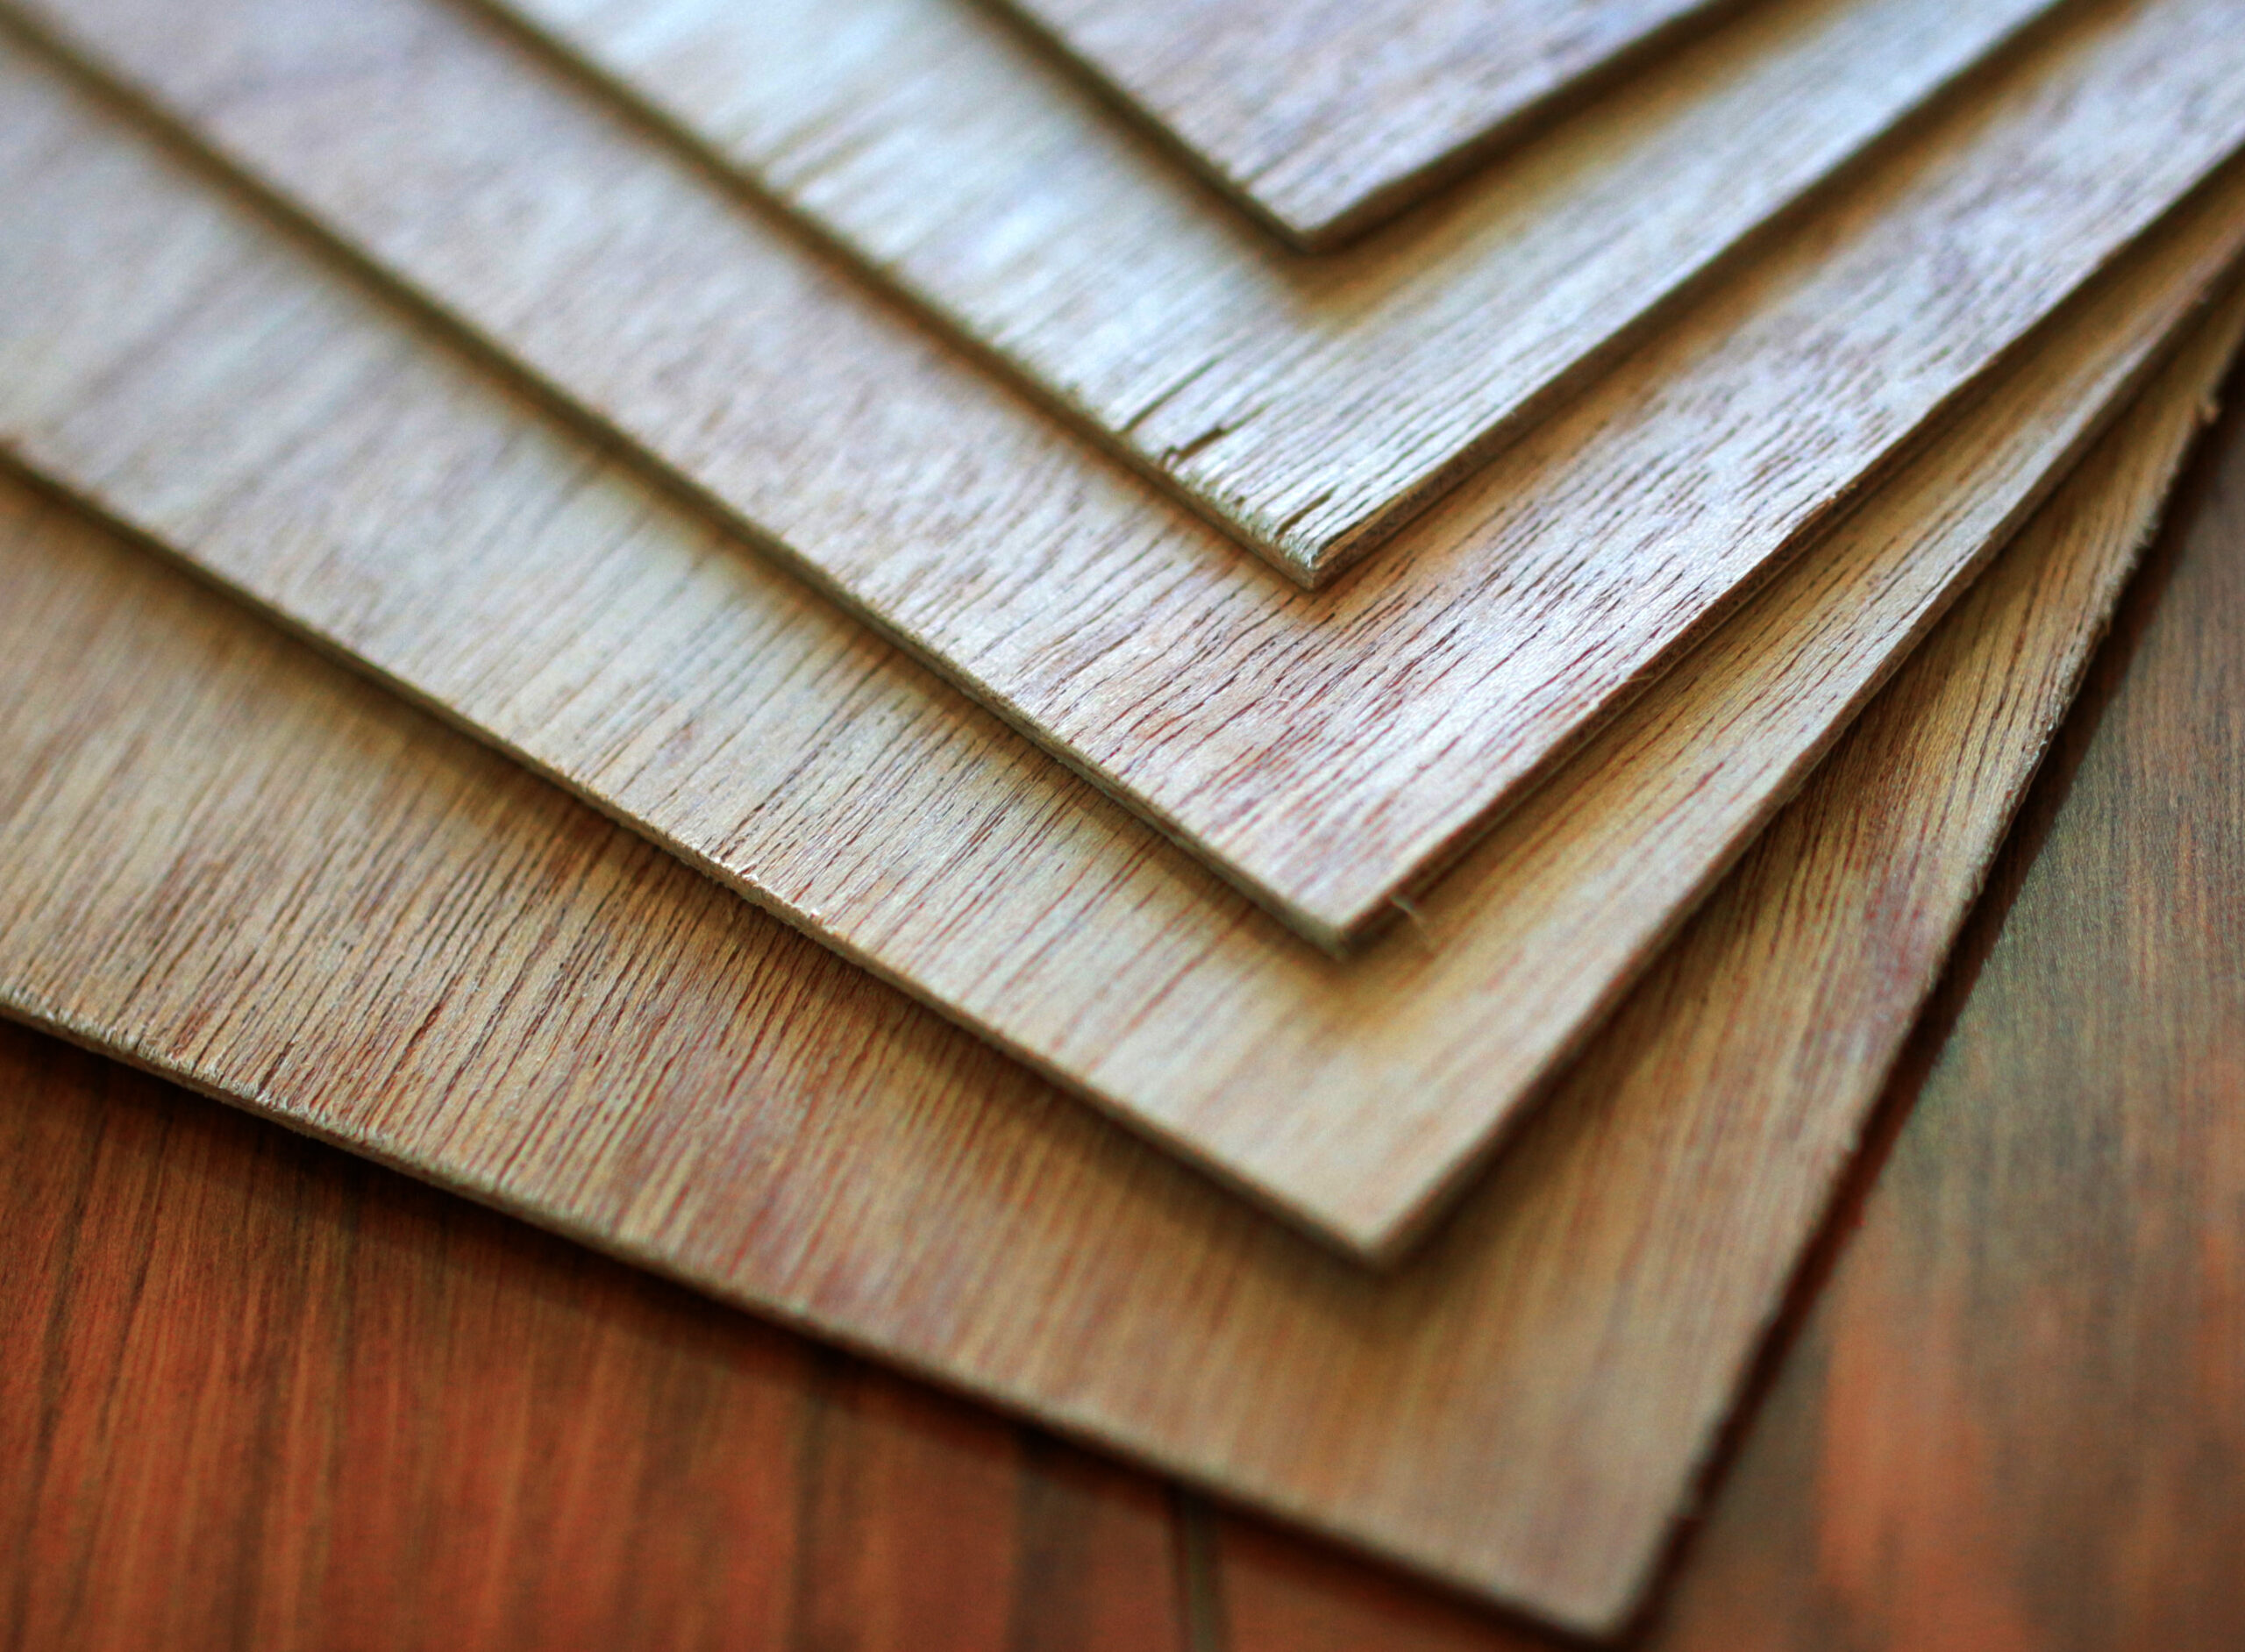 plywood